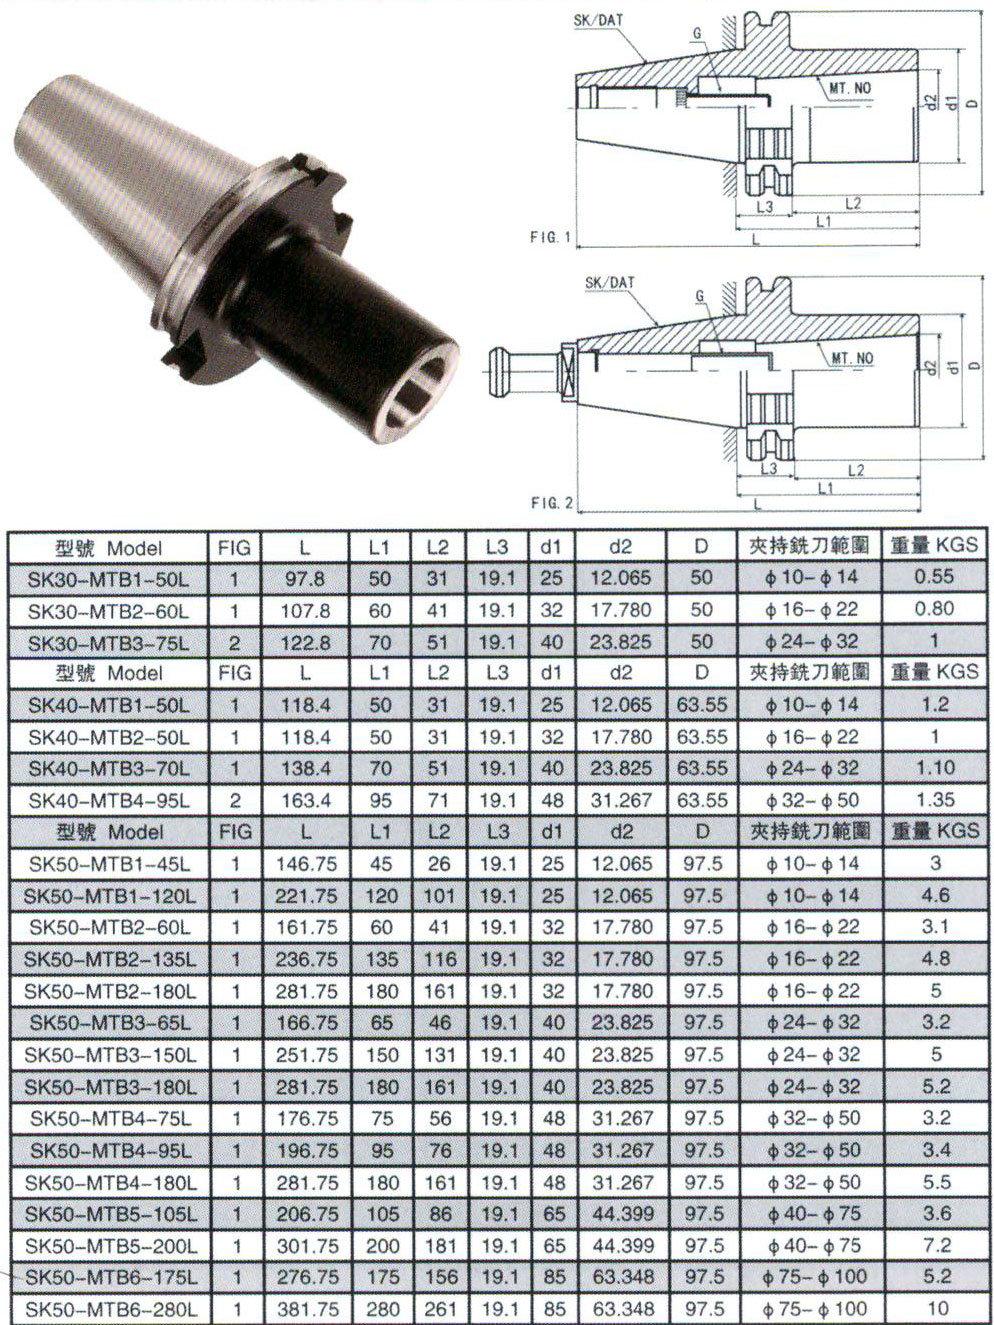 Bt/DIN2080/Jt/Sk/Dat/Cat Tool Holder, Sk40-MTB Morse Collect Taper Adapter